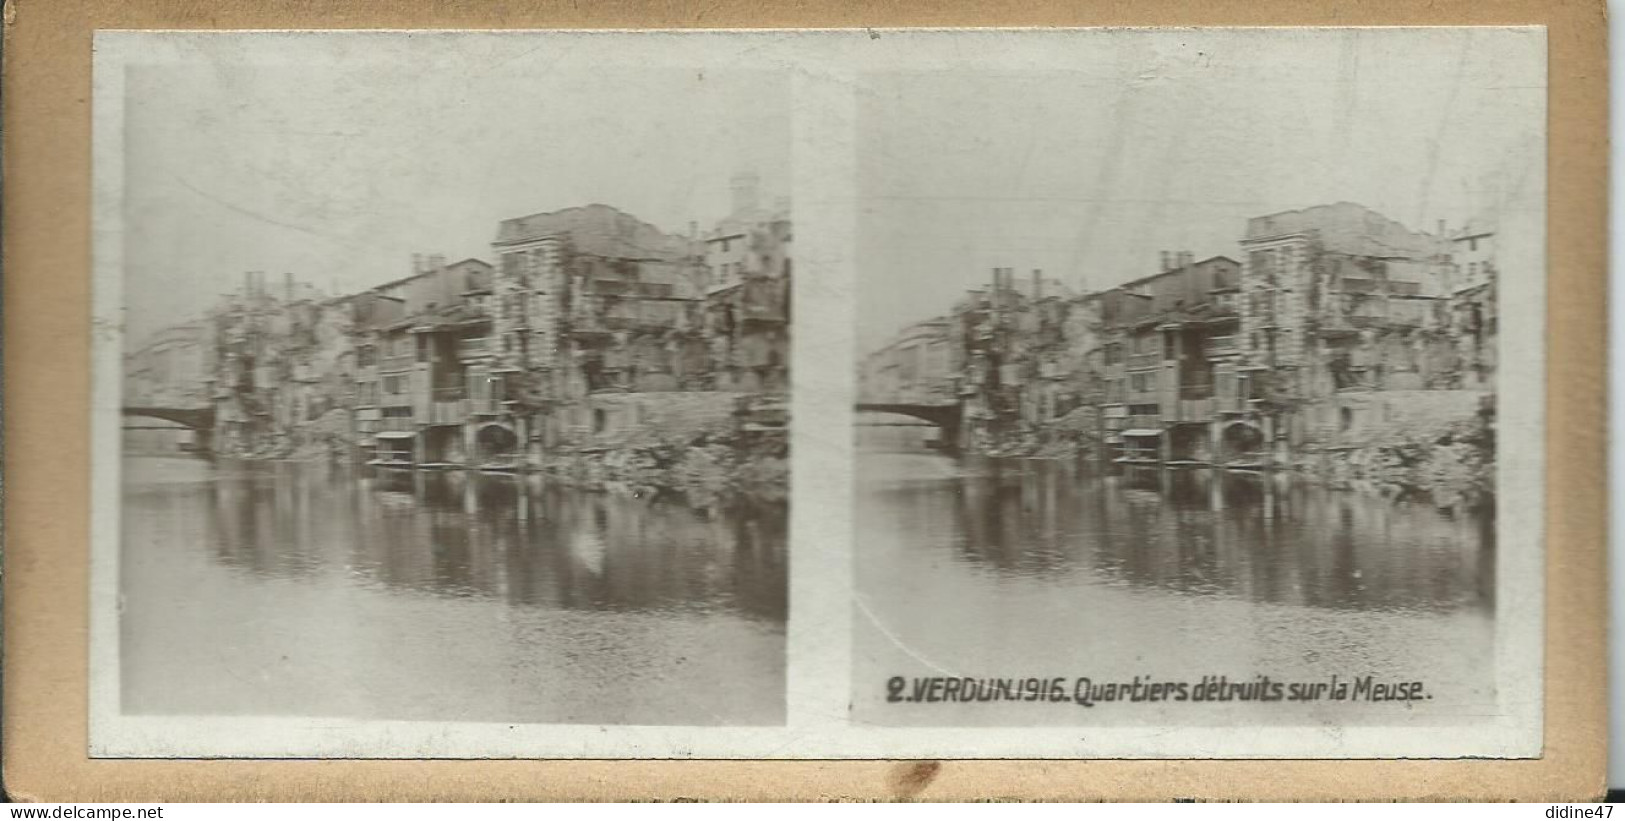 PHOTOS STÉRÉOSCOPIQUES - VERDUN - 1916 Quartier Détruit Sur La Meuse - Photos Stéréoscopiques